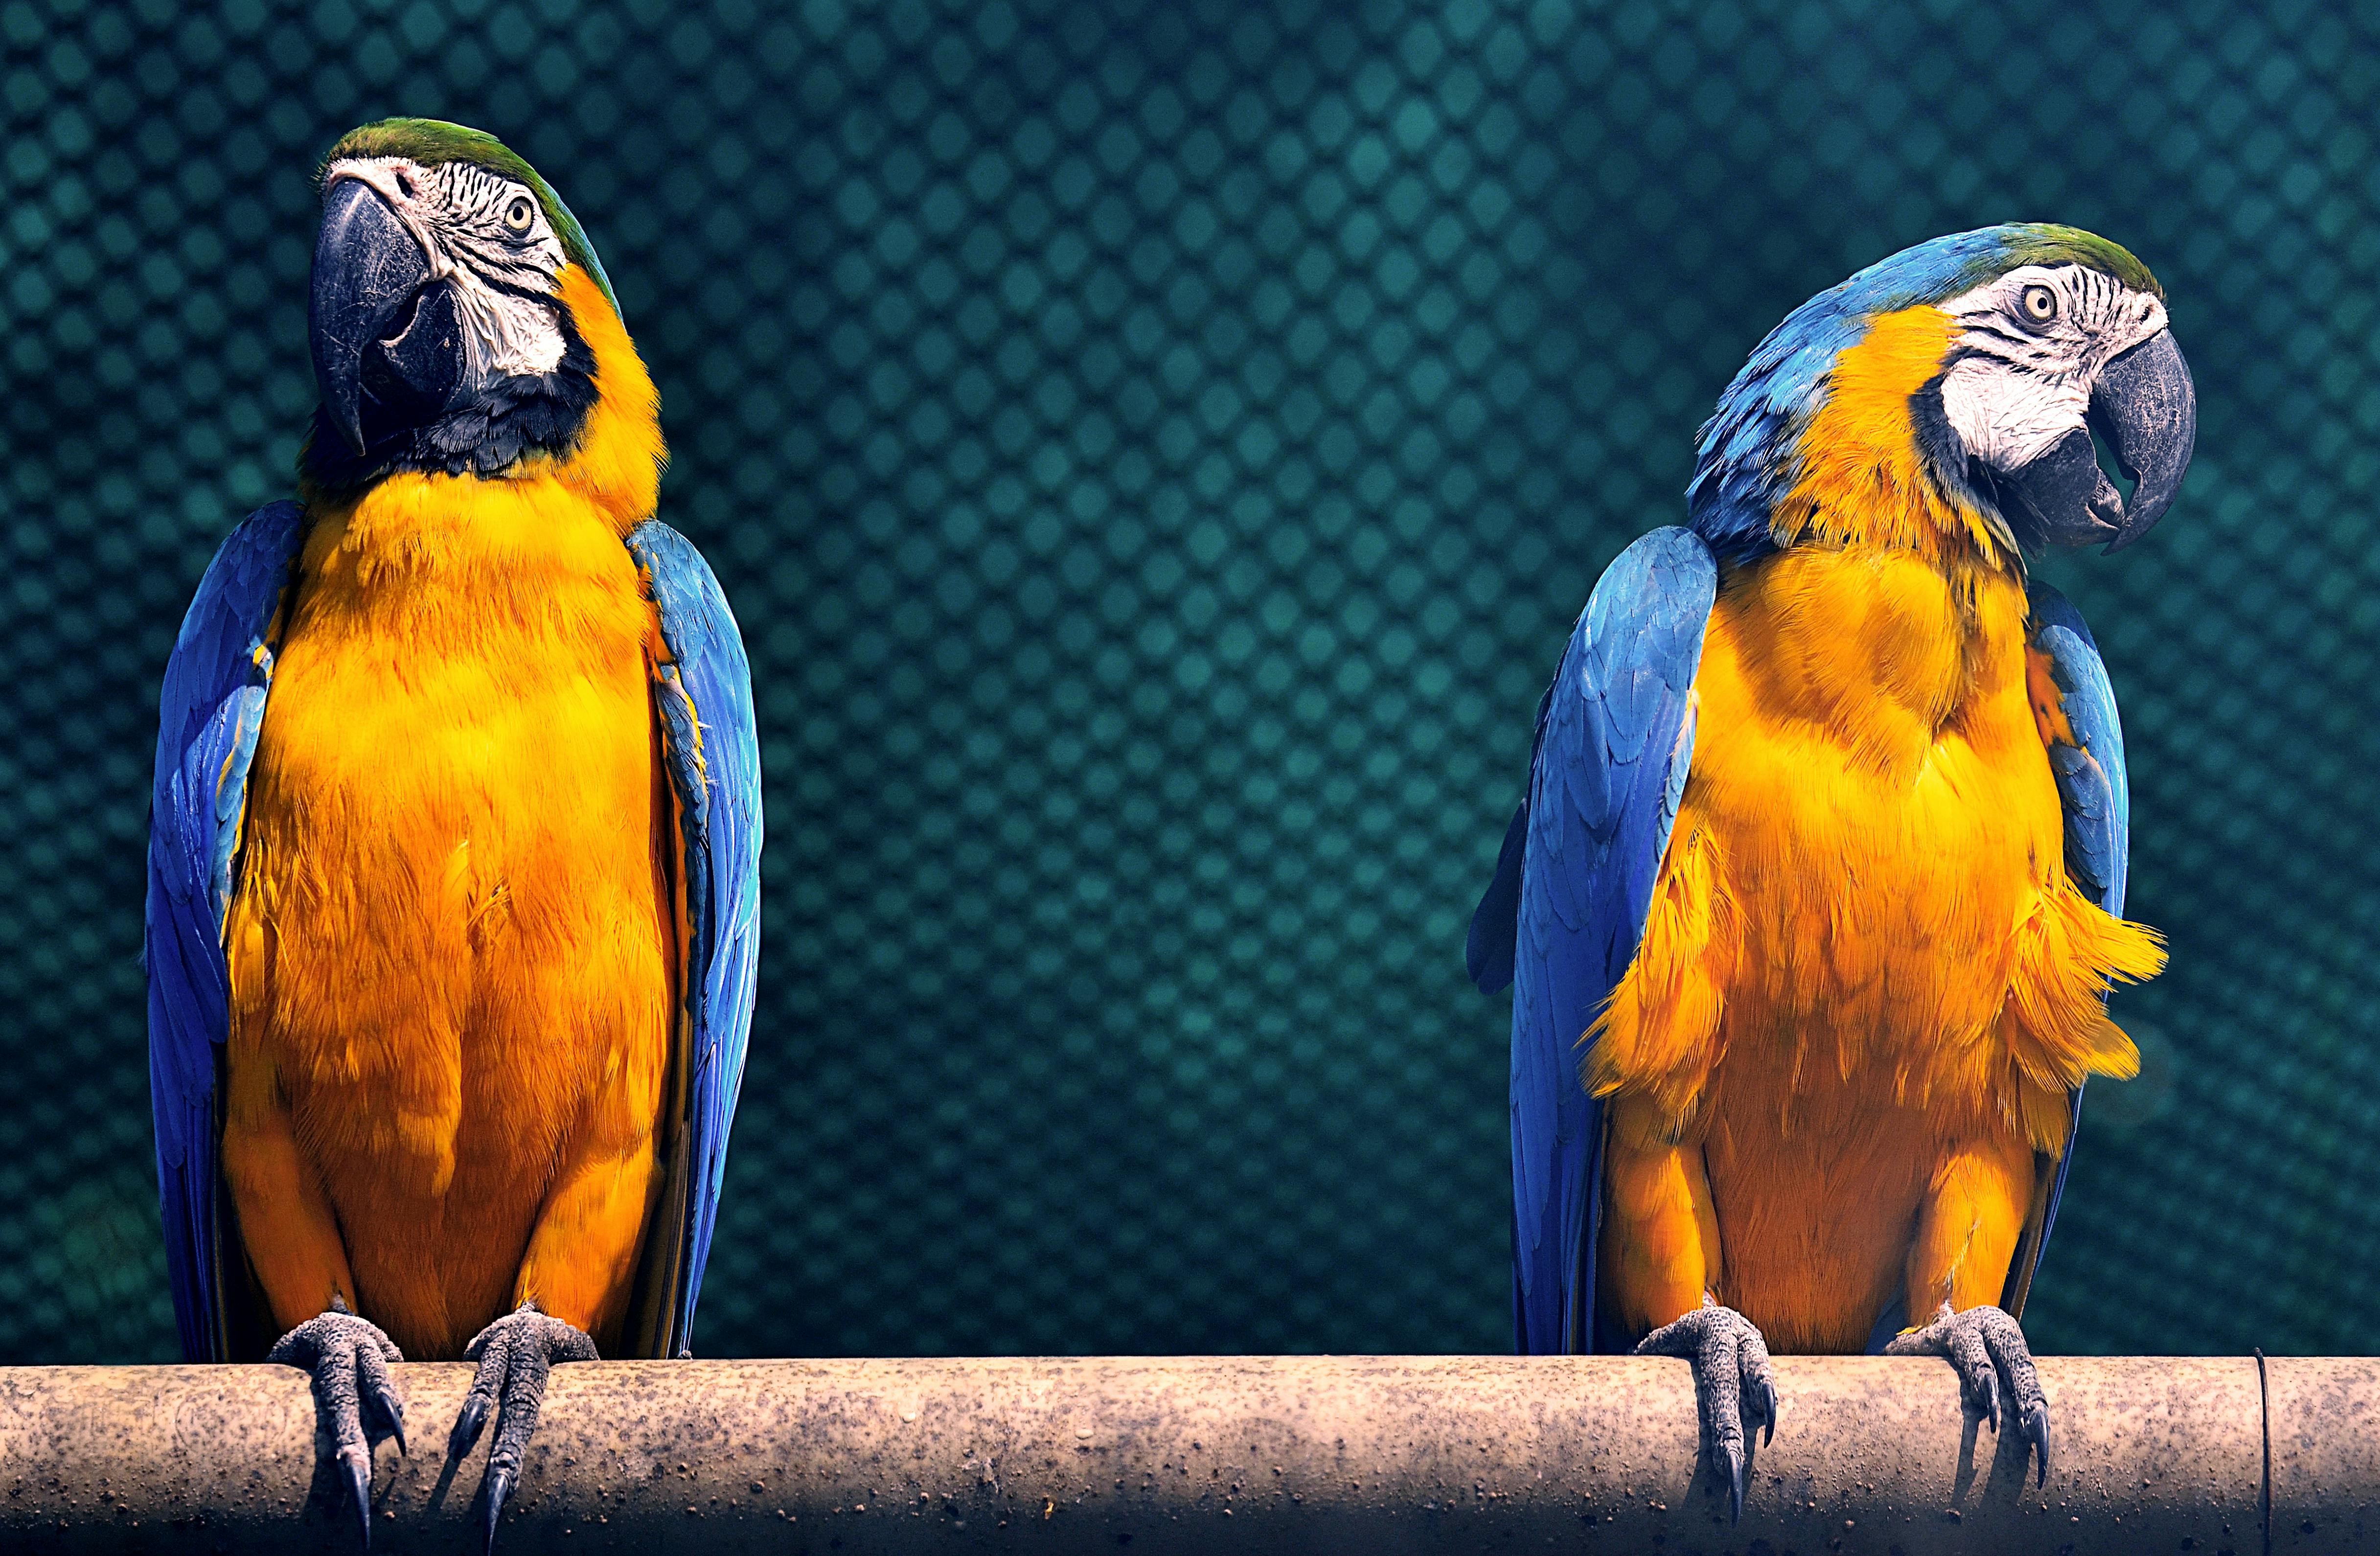 Tropical Bird Macaw Parrot Hd Wallpaper 74920  Wallpapers13com